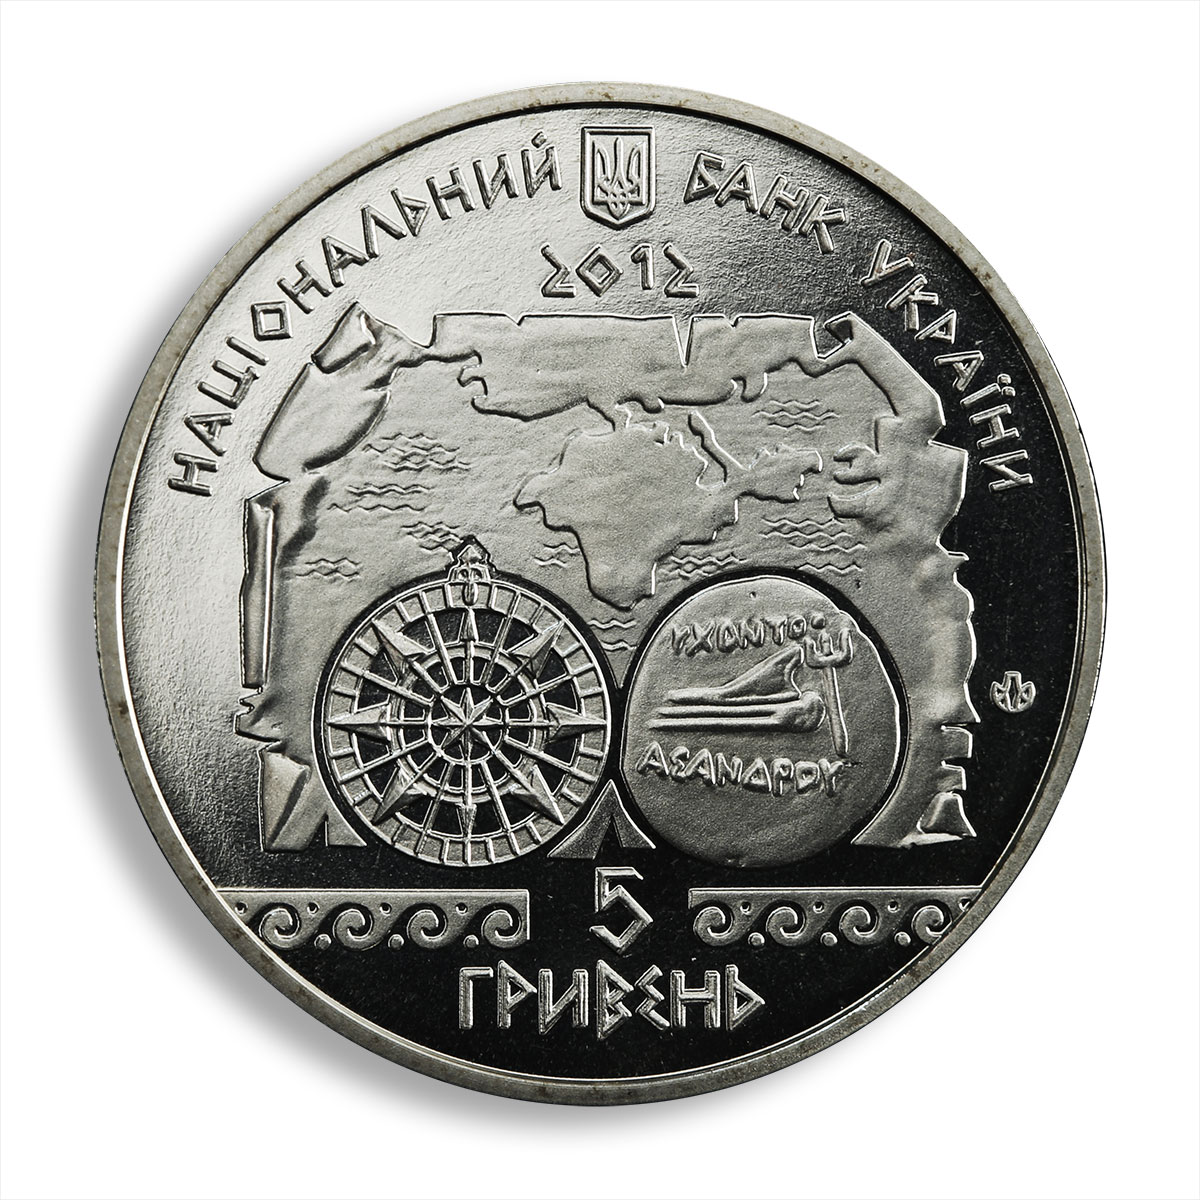 Ukraine 5 hryvnia Ancient Navigation antique ship boat marine nickel coin 2012